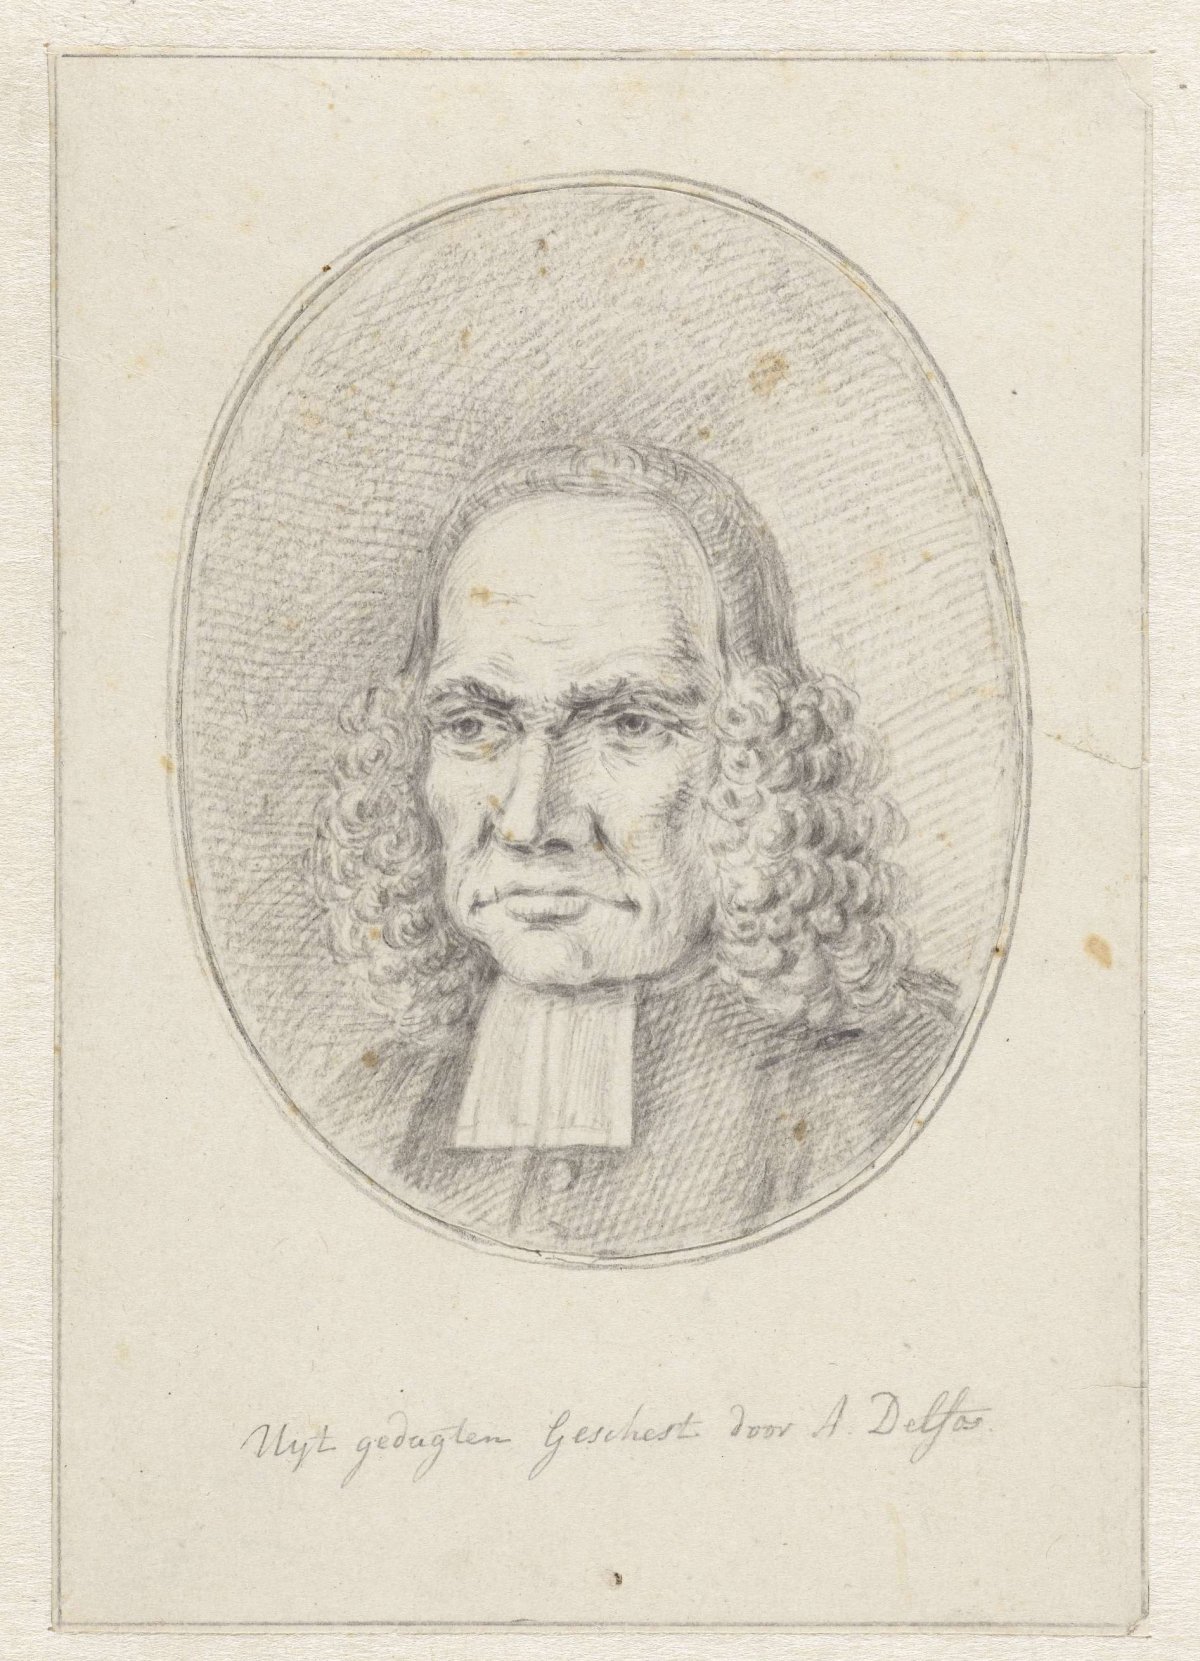 Portrait of Gualtherus Zoutmaat, Abraham Delfos, c. 1741 - c. 1820